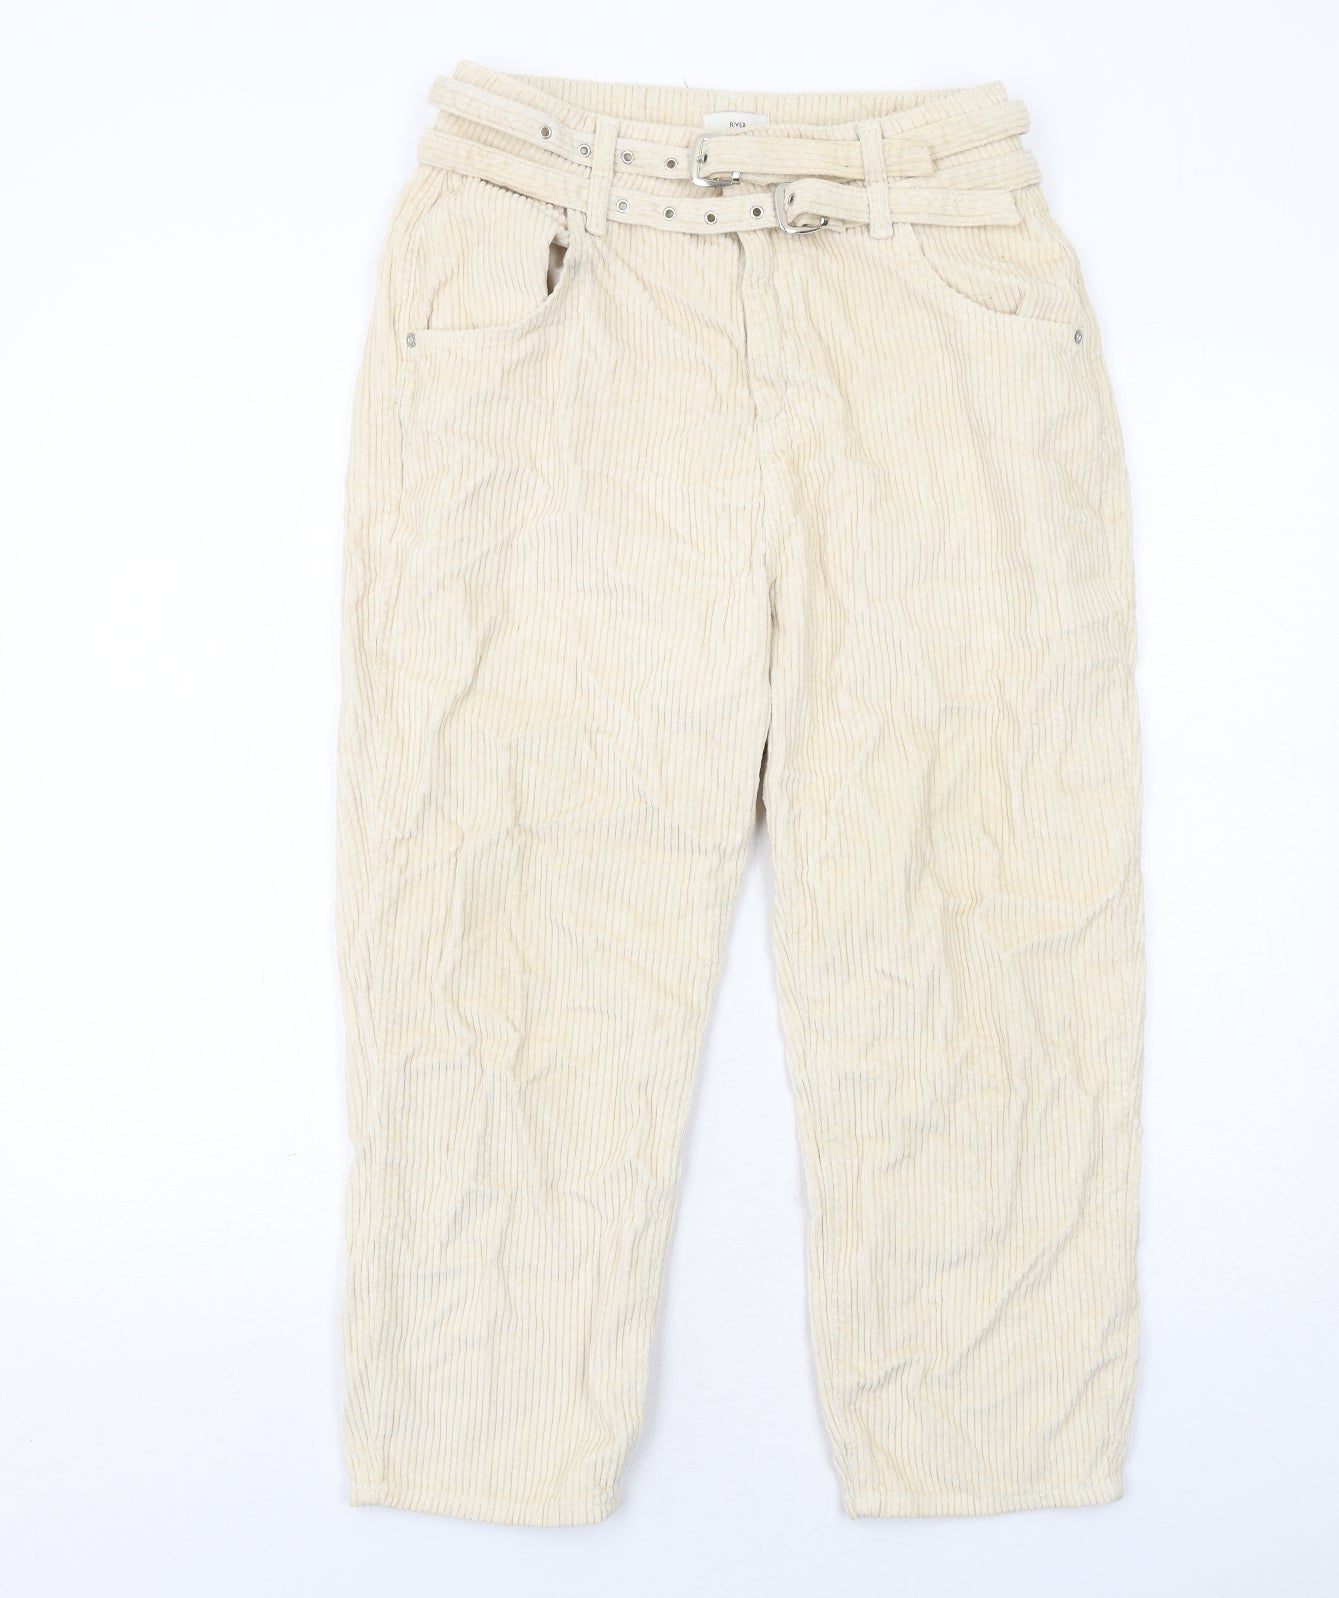 River Island Womens Ivory Cotton Chino Trousers Size 10 Regular Zip